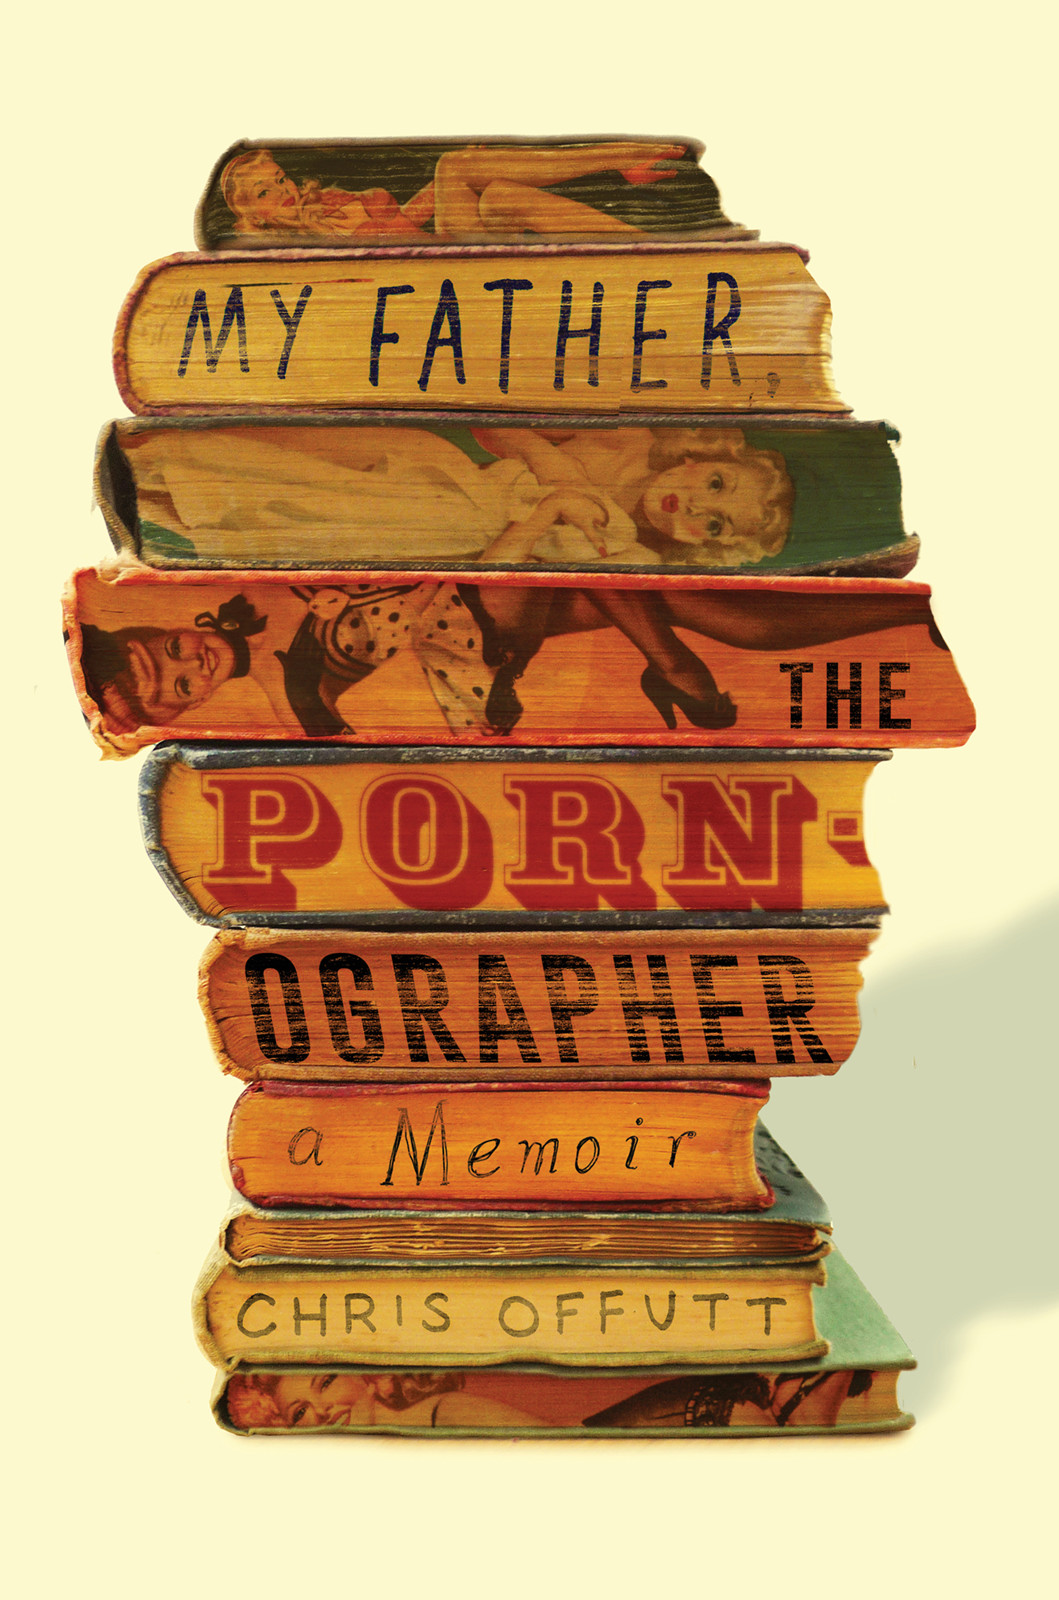 Offutt Chris - My Father, the Pornographer: A Memoir, скачать бесплатно книгу в формате fb2, doc, rtf, html, txt